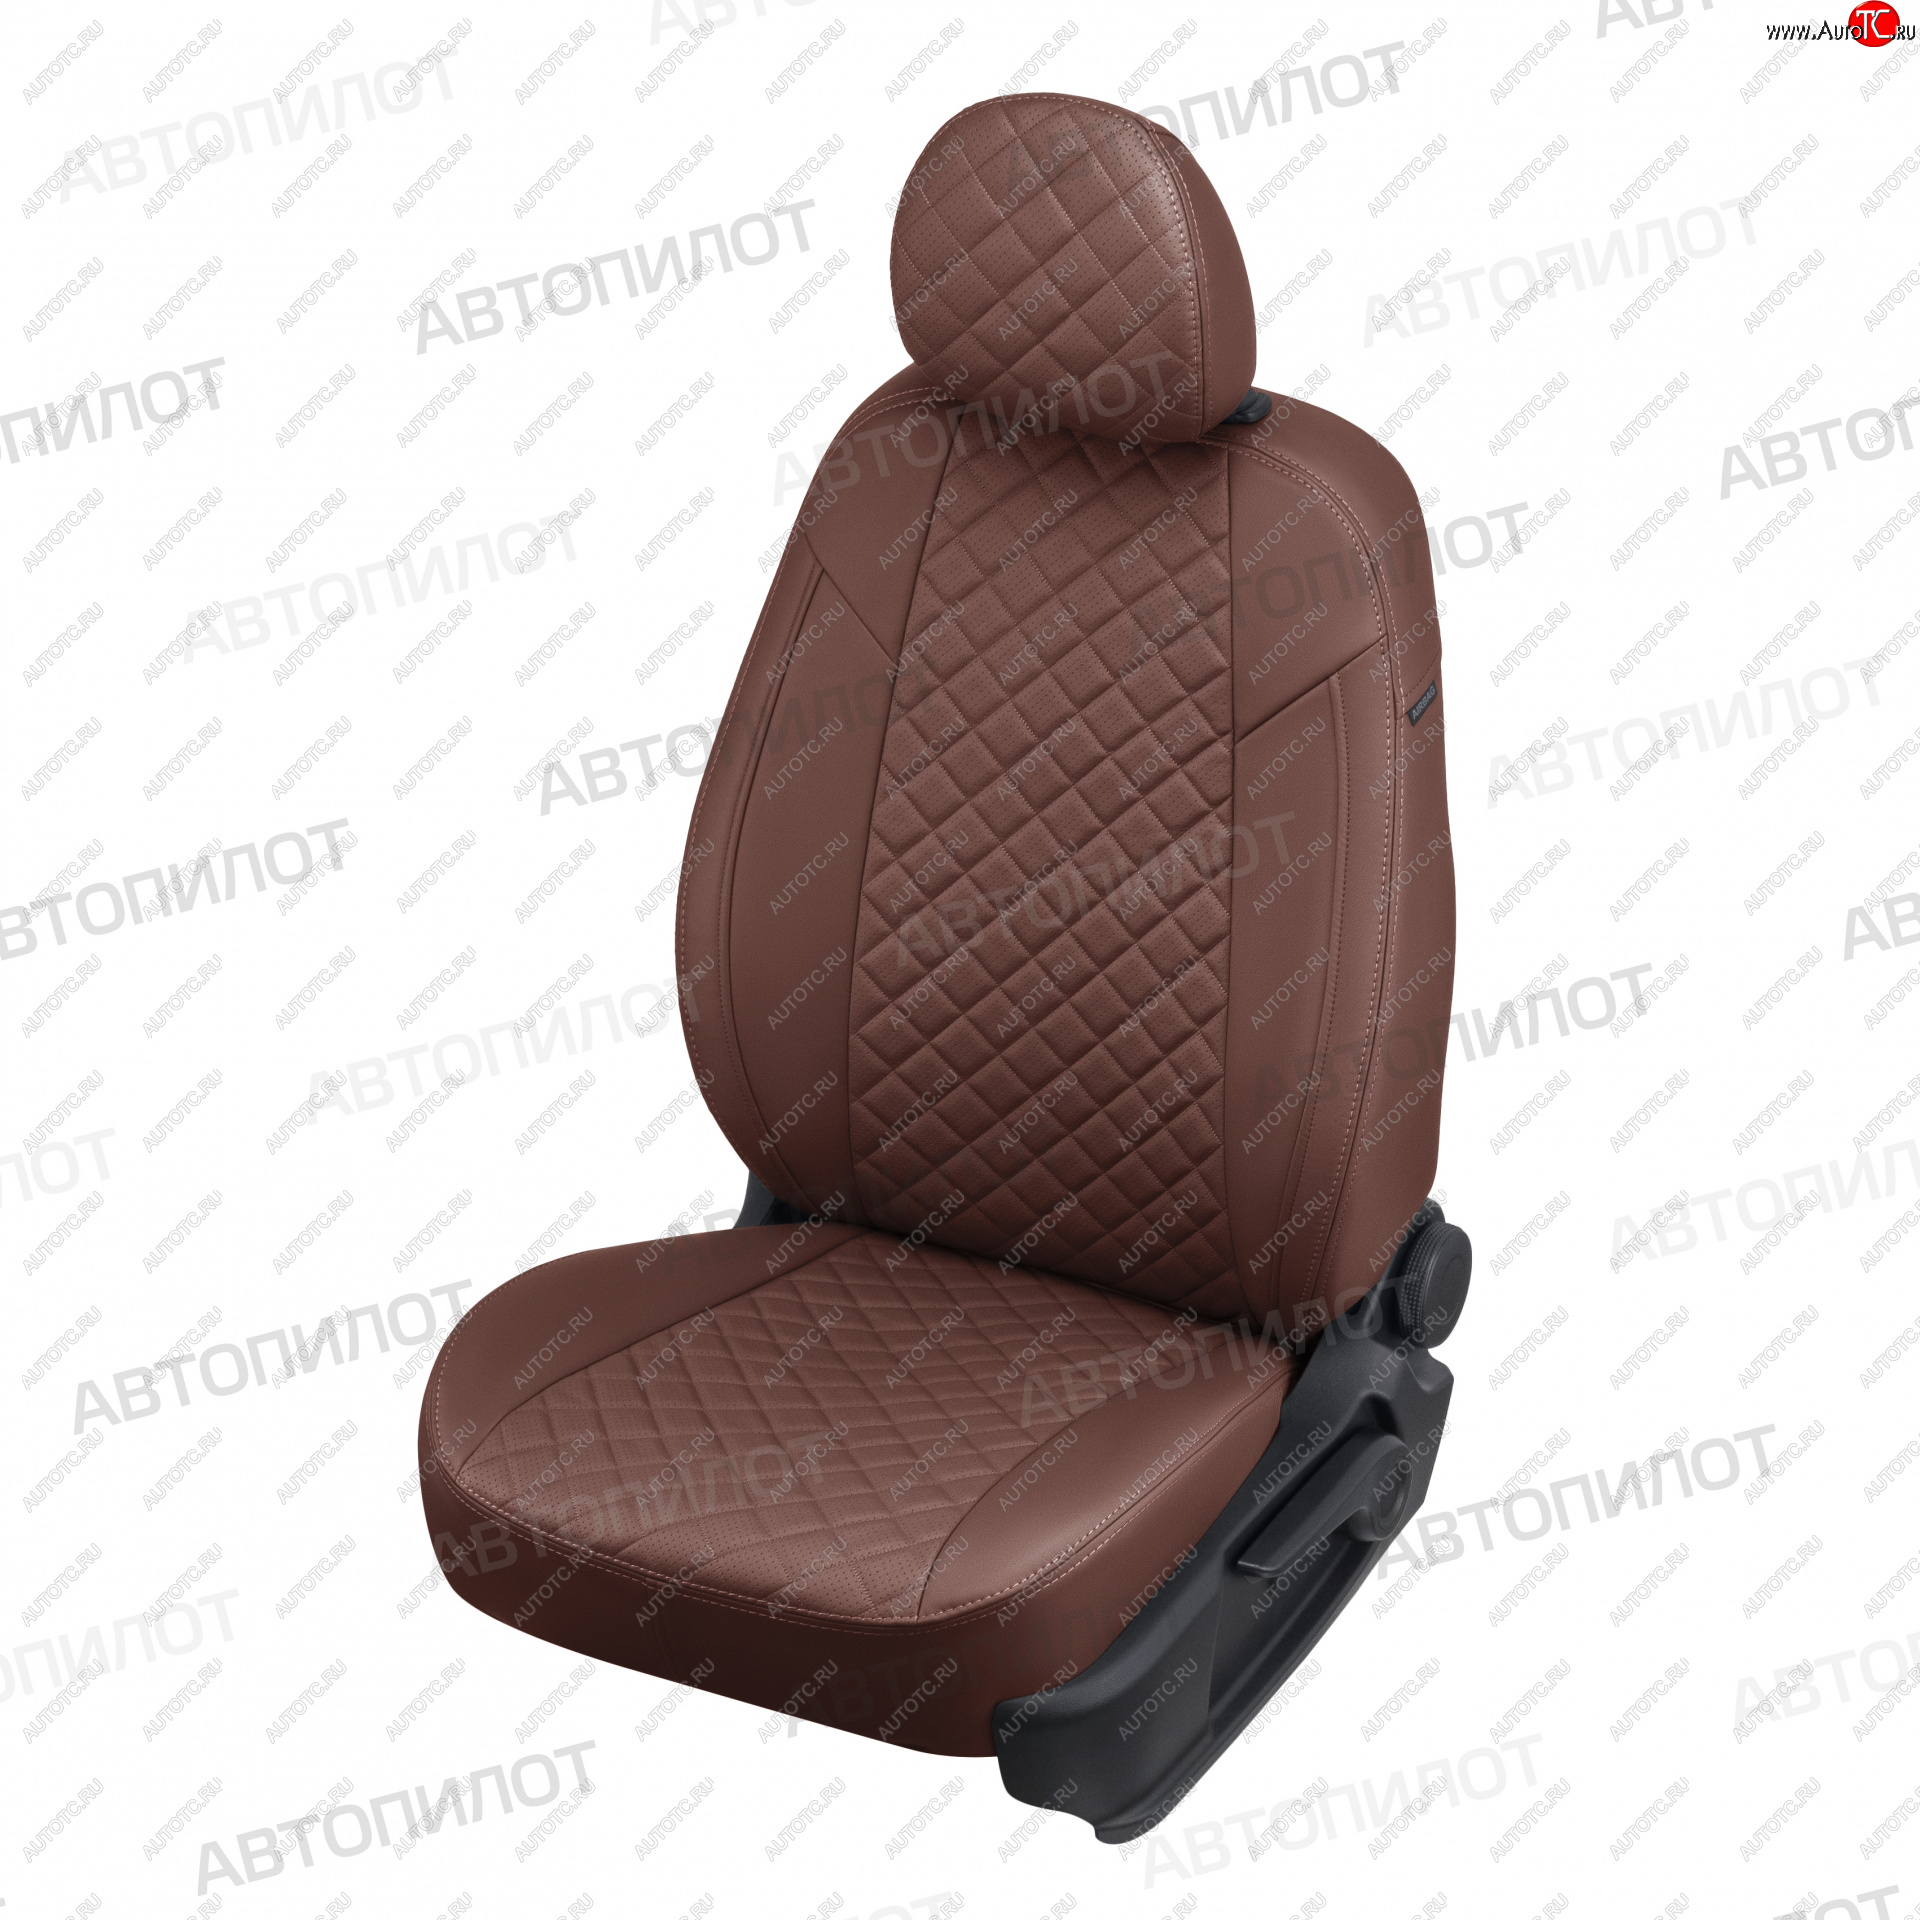 13 999 р. Чехлы сидений (экокожа) Автопилот Ромб  Chery Kimo  A1 (2008-2014) (темно-коричневый)